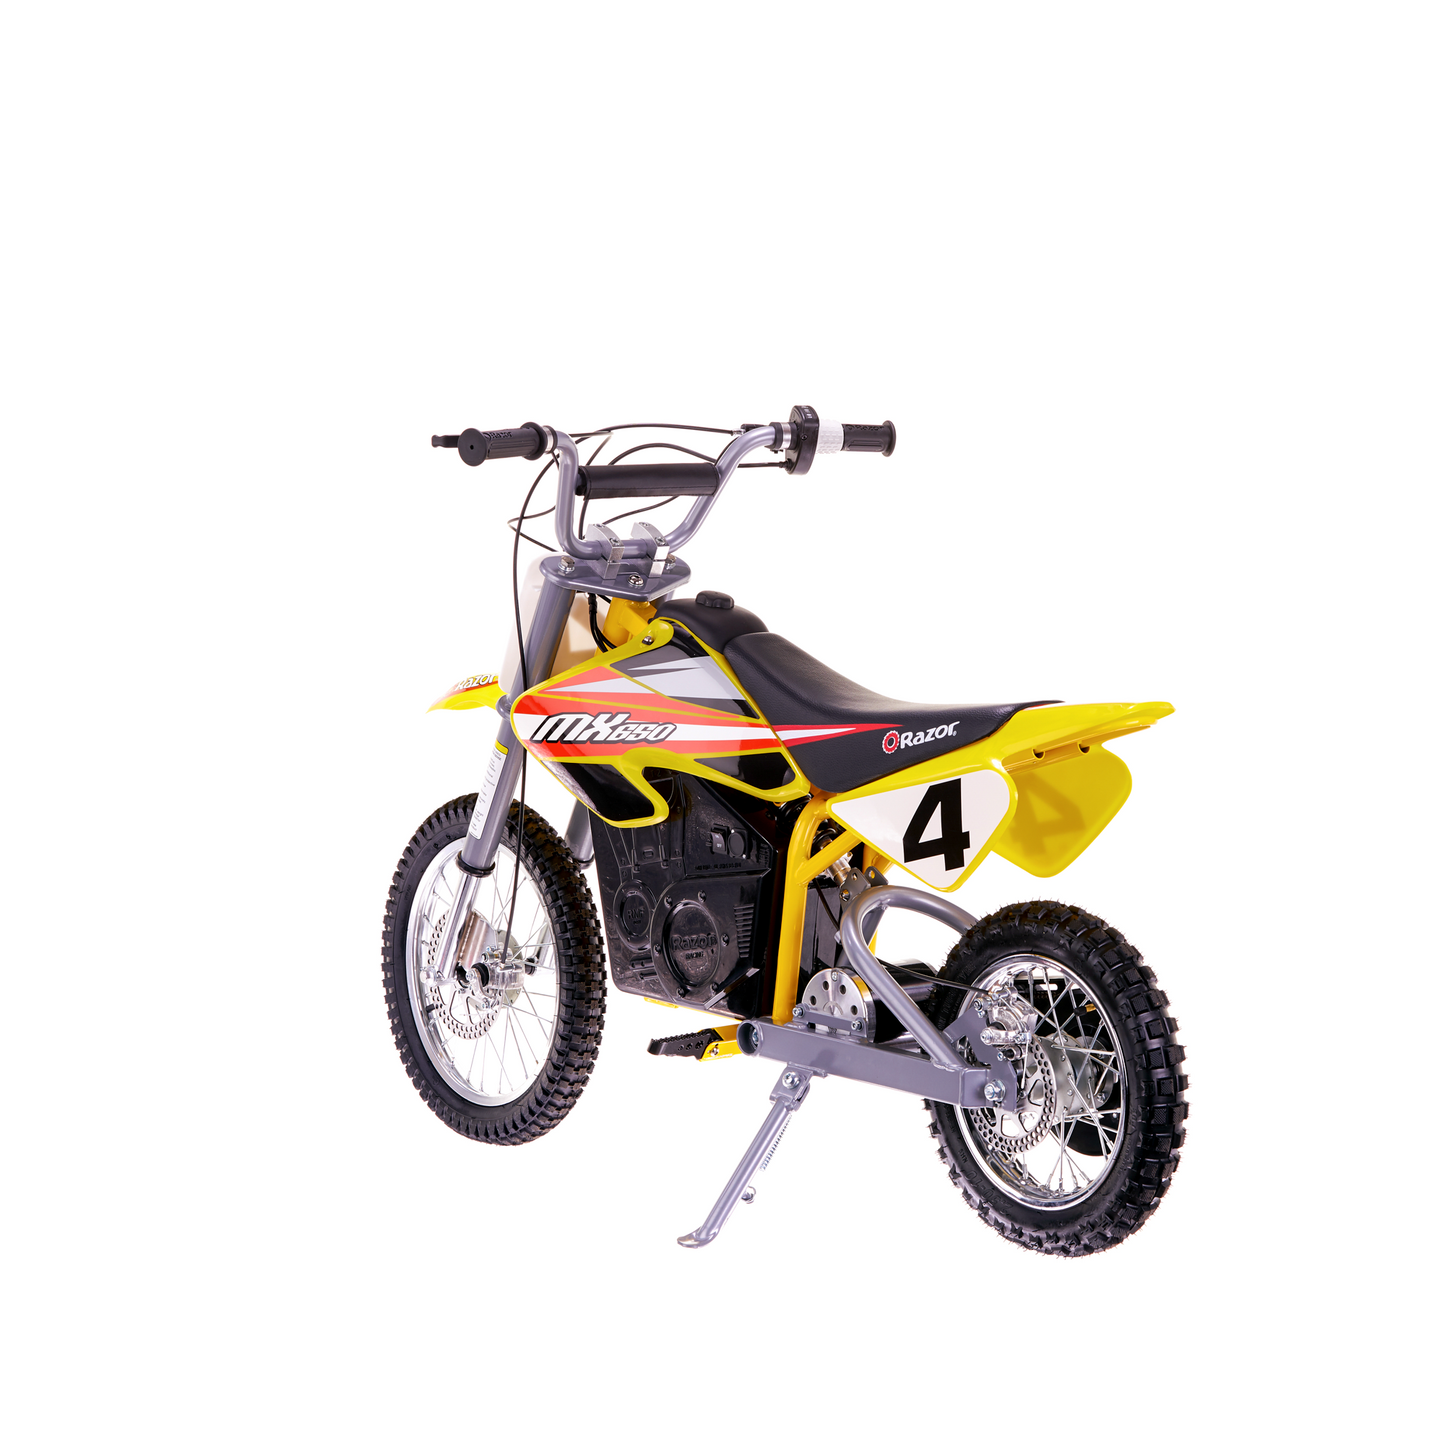 Motorbike D. Rocket MX650 27km/Hr